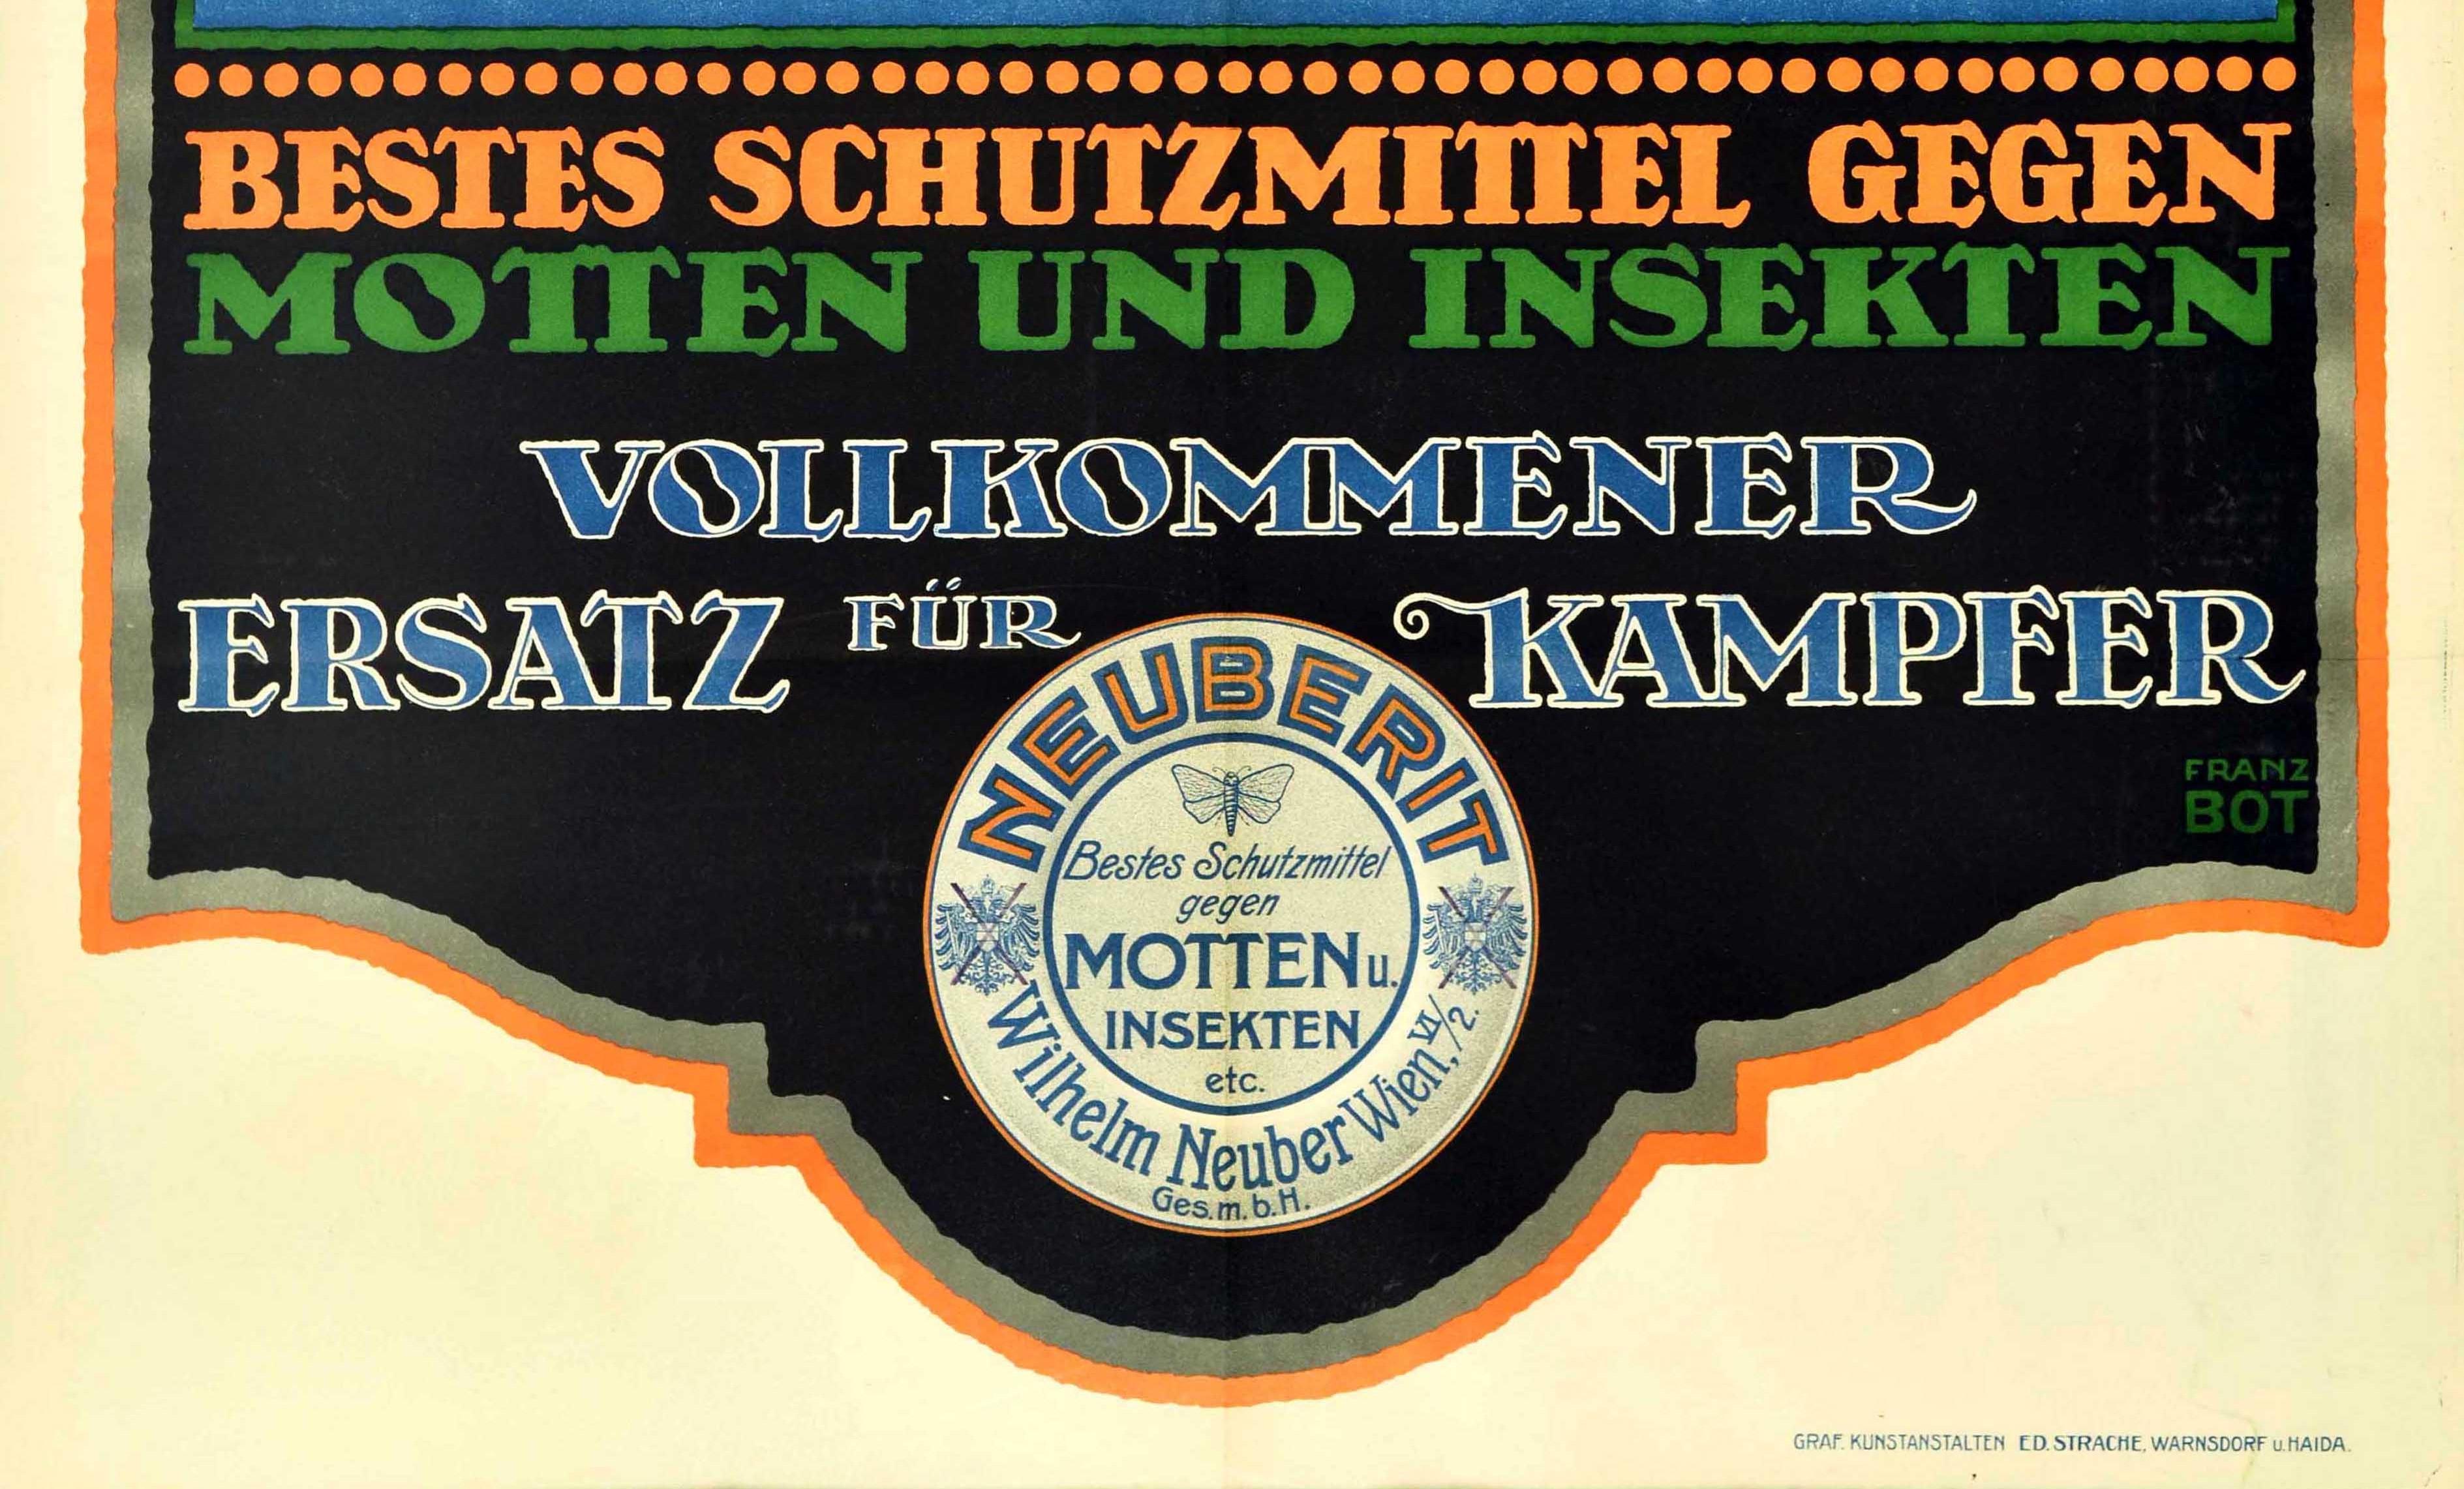 Austrian Original Antique Poster Neuberit Moth Insect Repellent Chameleon Design Insekten For Sale